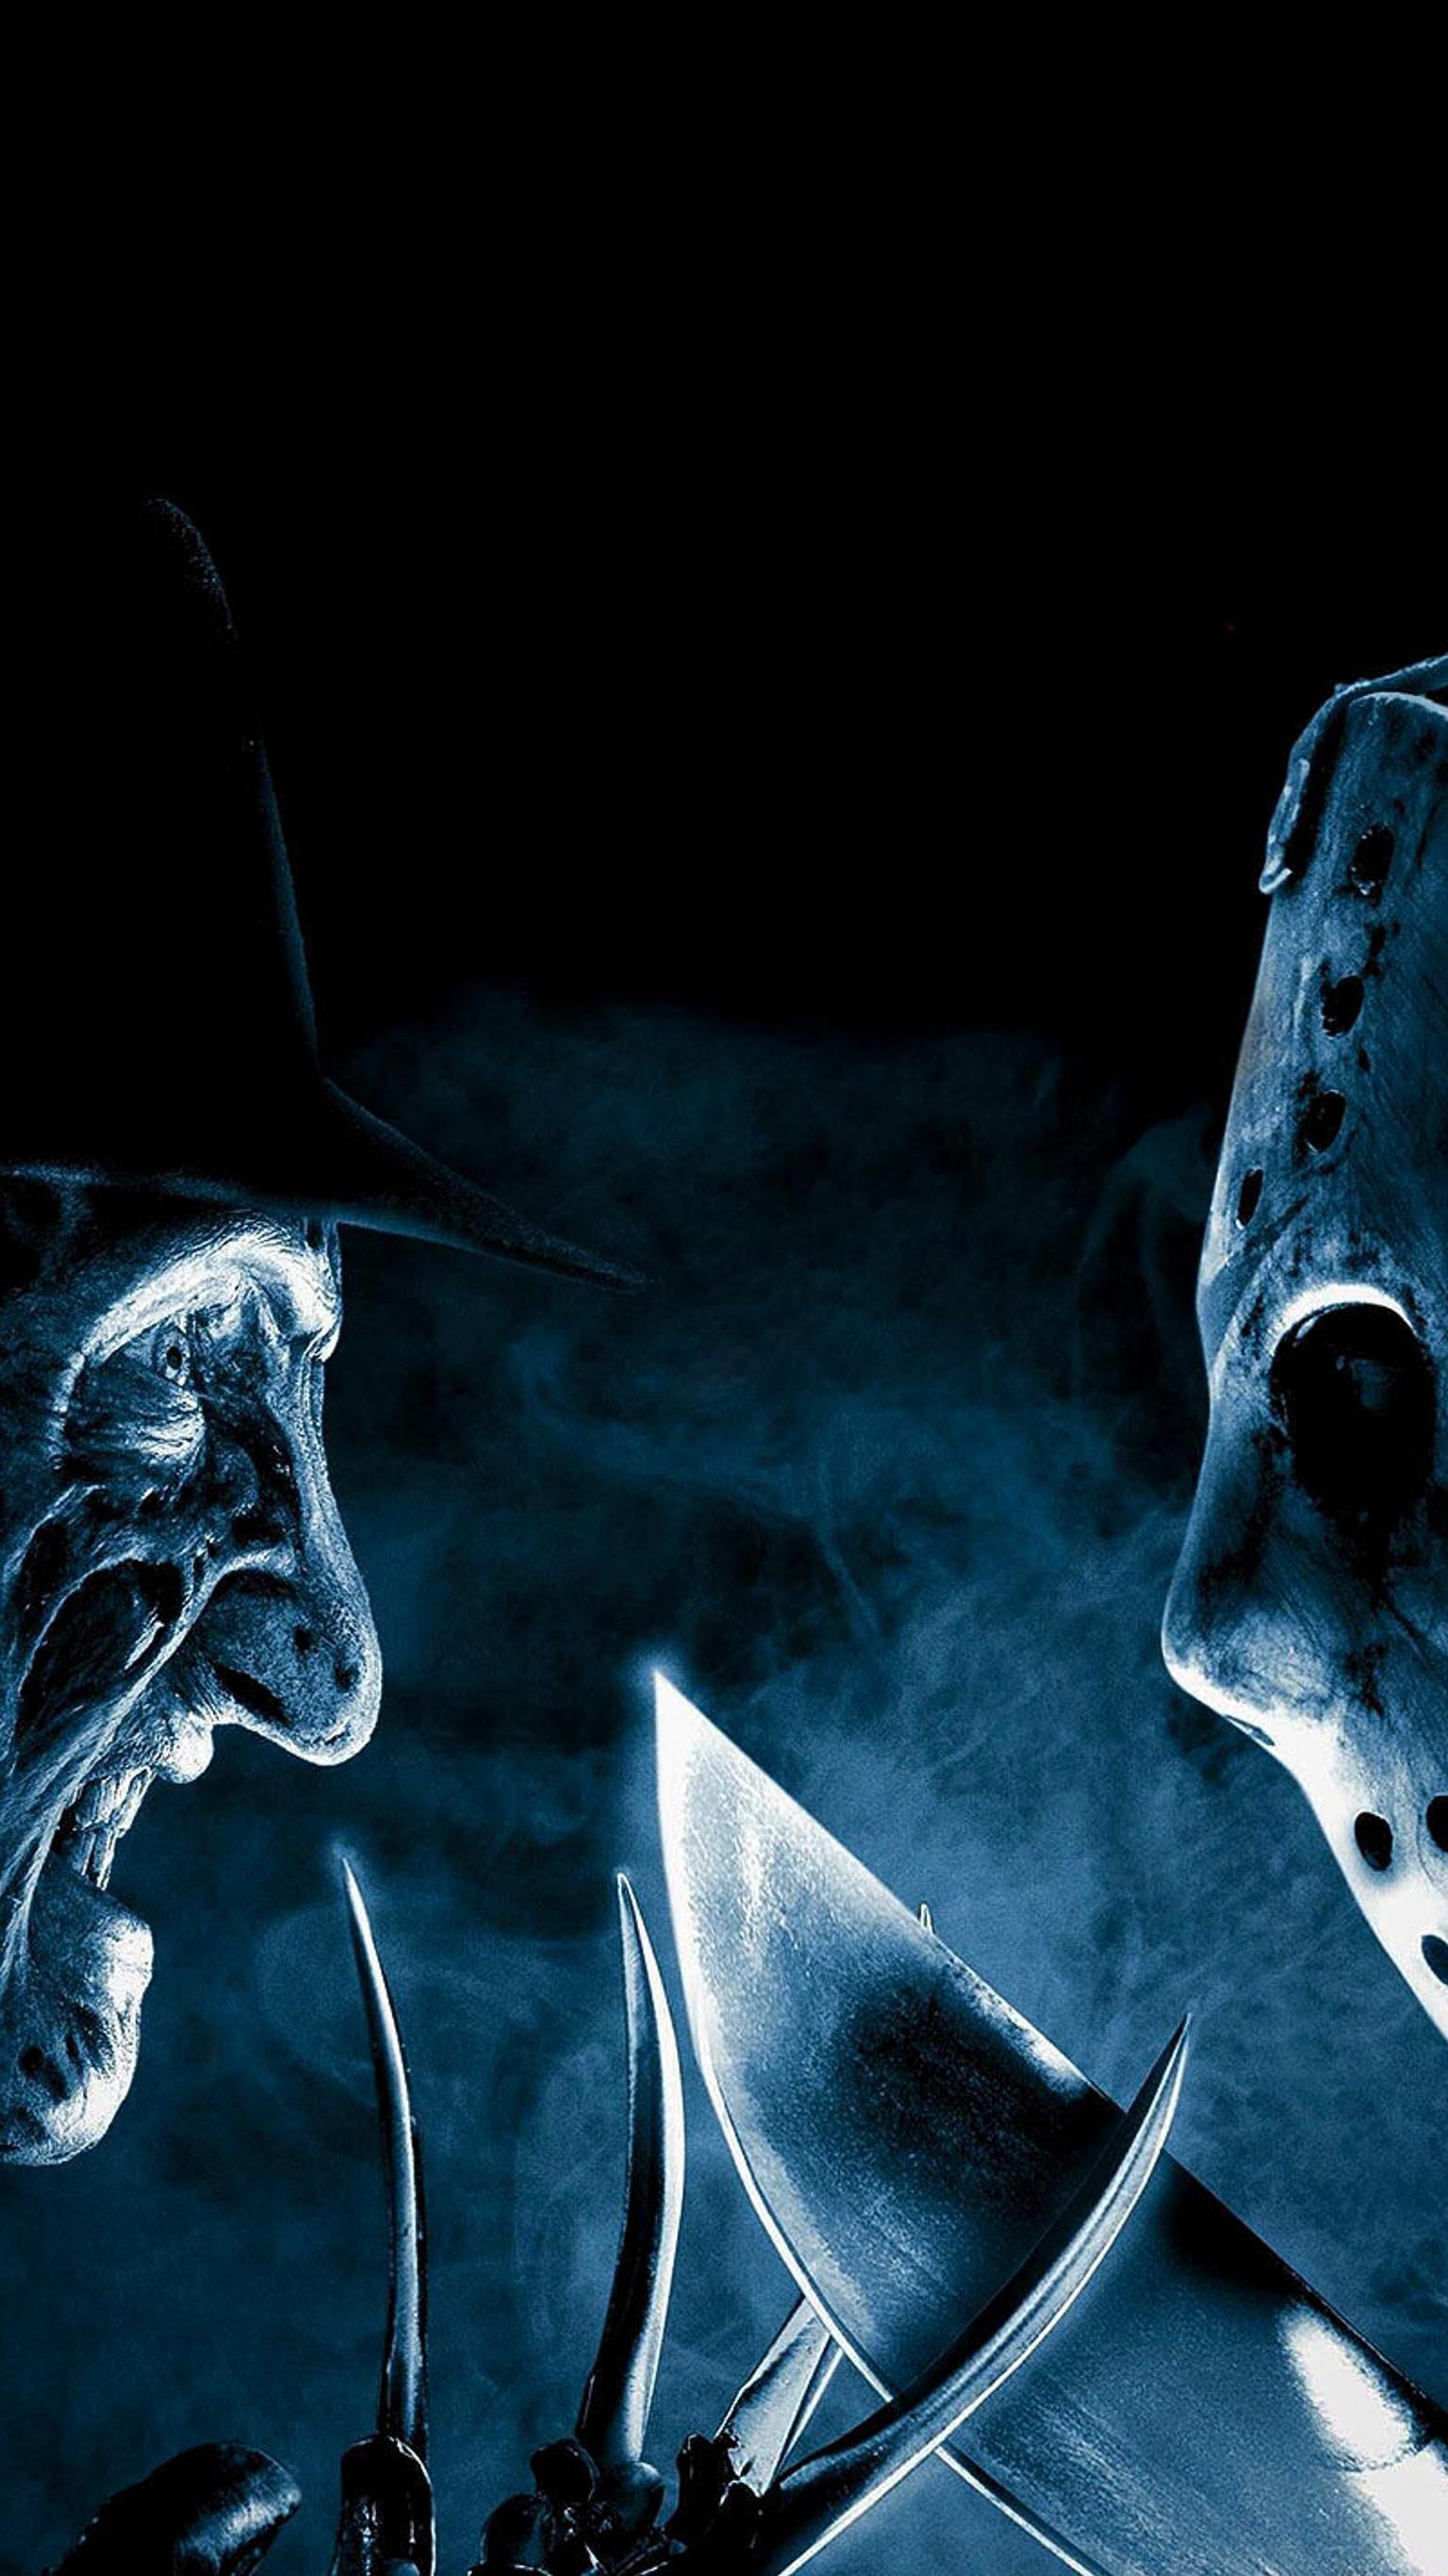 Freddy vs. Jason (2003) Phone Wallpaper. Moviemania. Scary wallpaper, Freddy vs jason movie, Horror movie icons